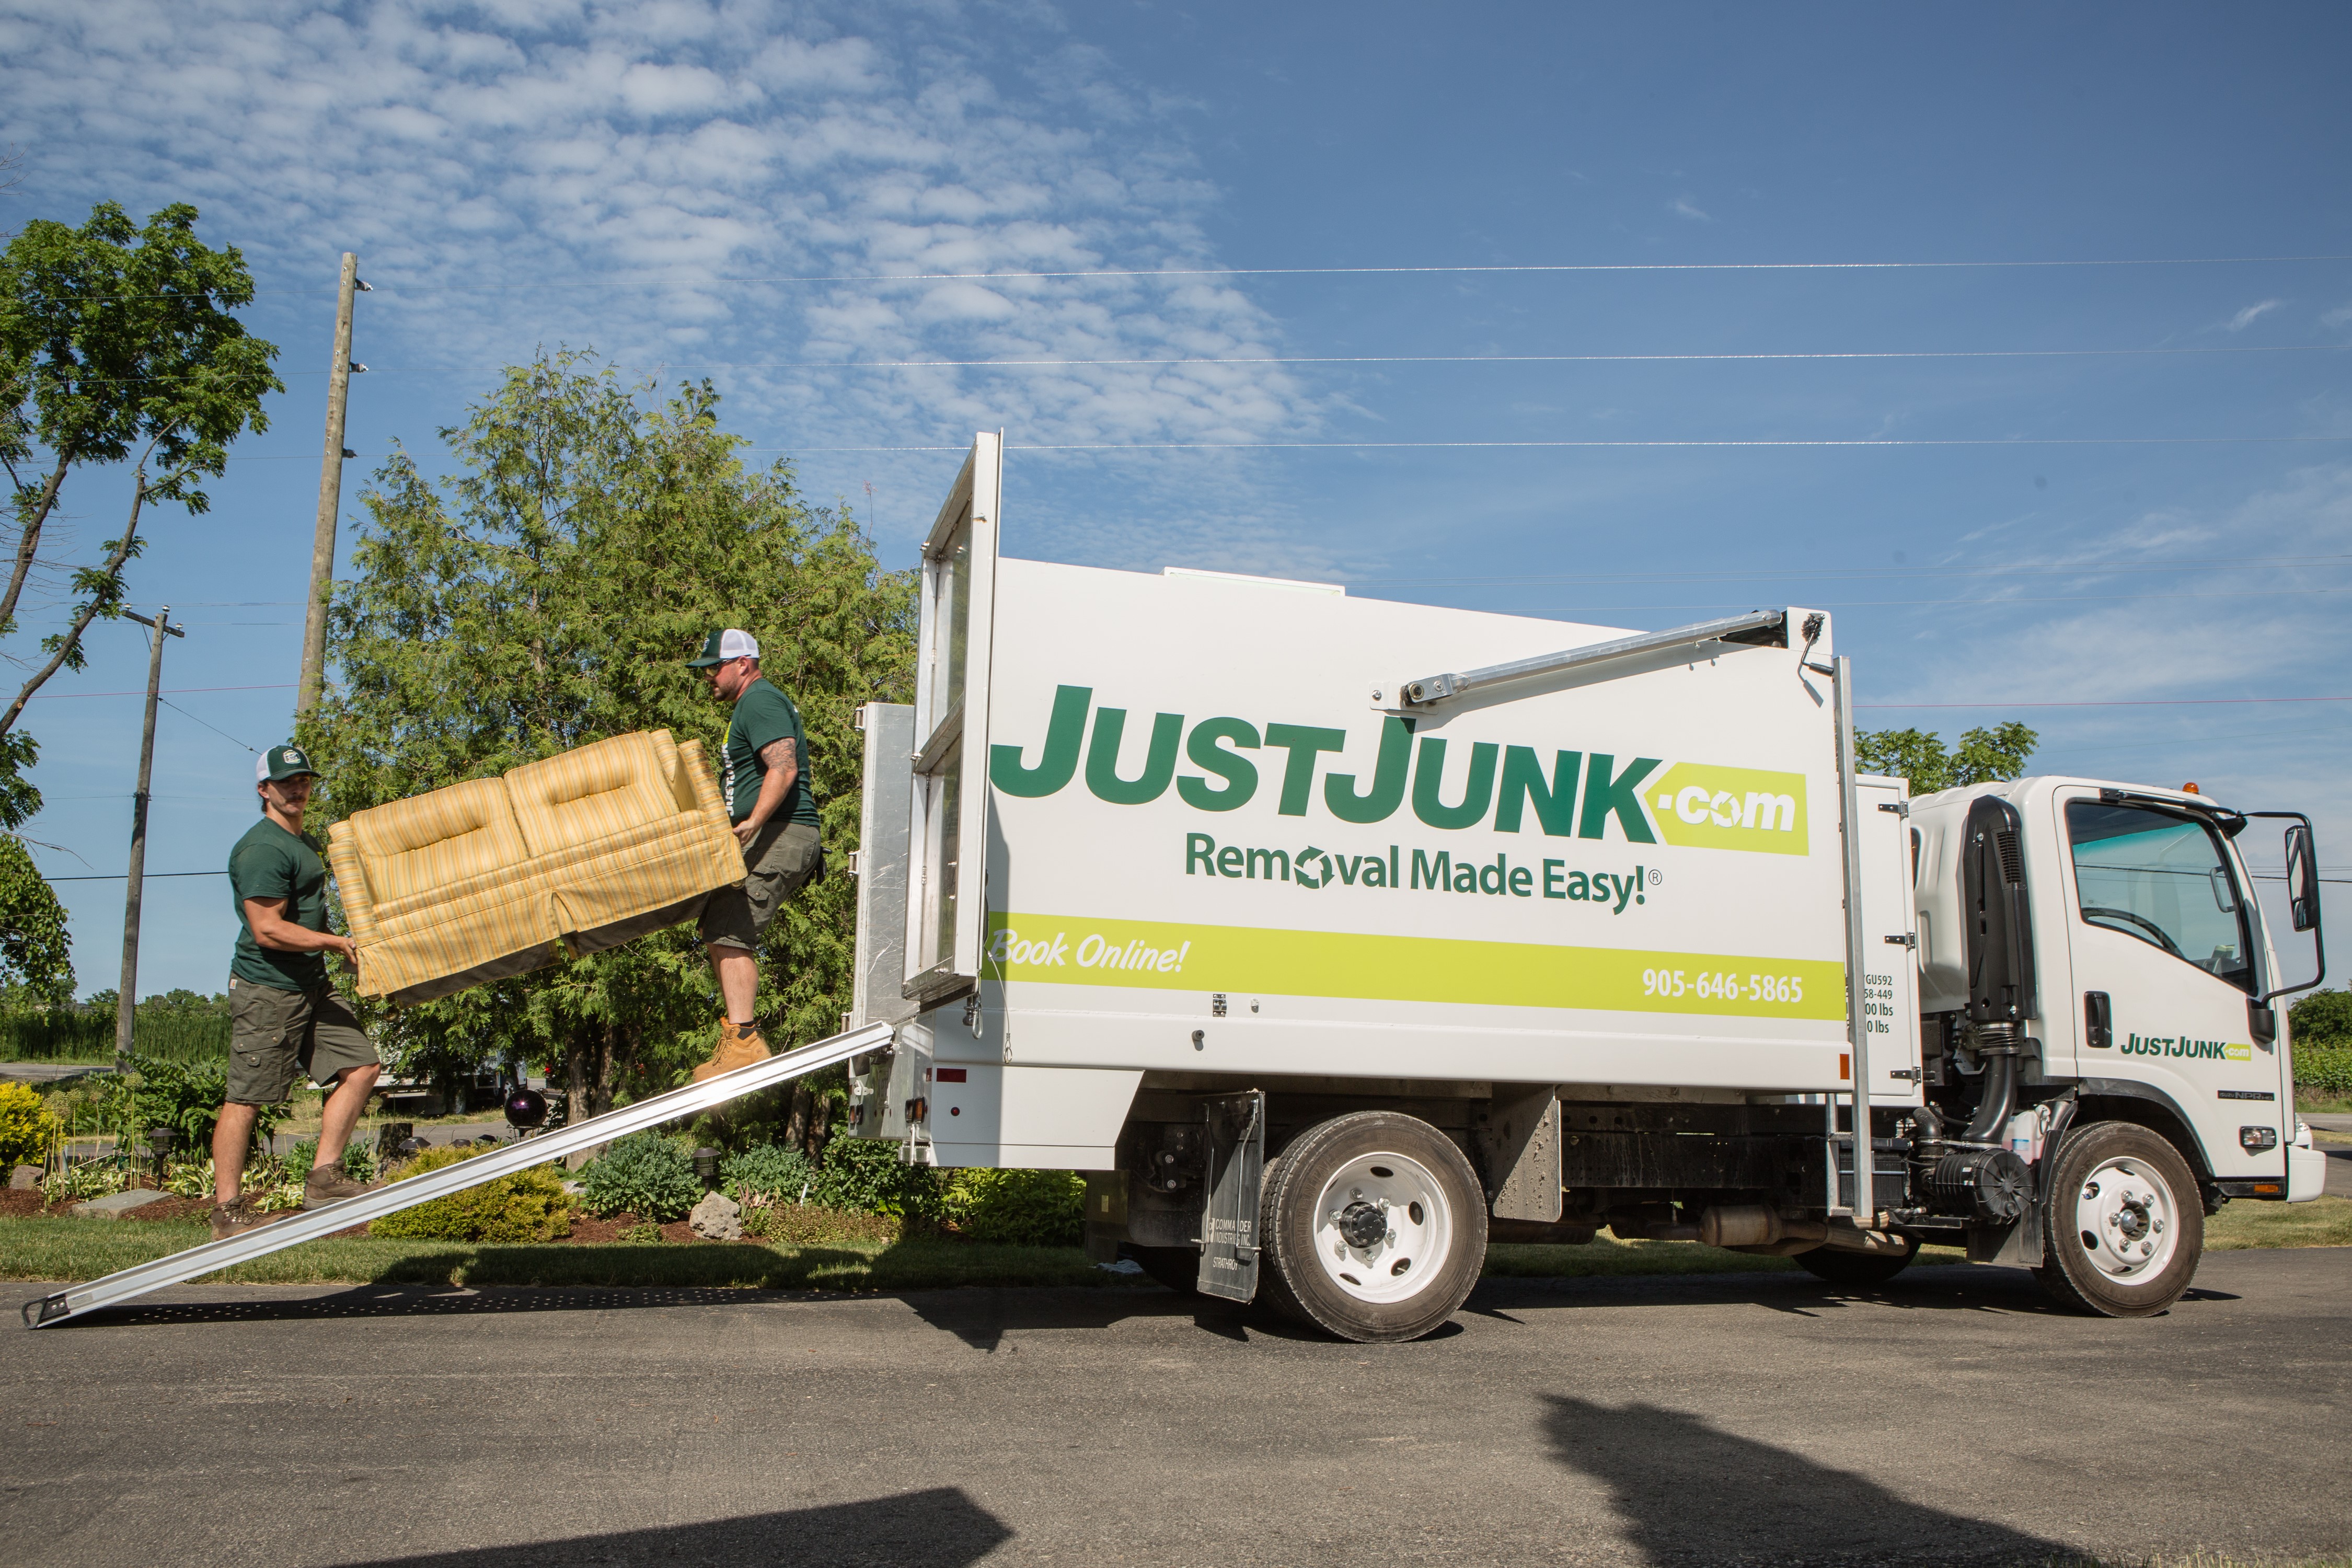 JUSTJUNK - Junk Removal Edmonton